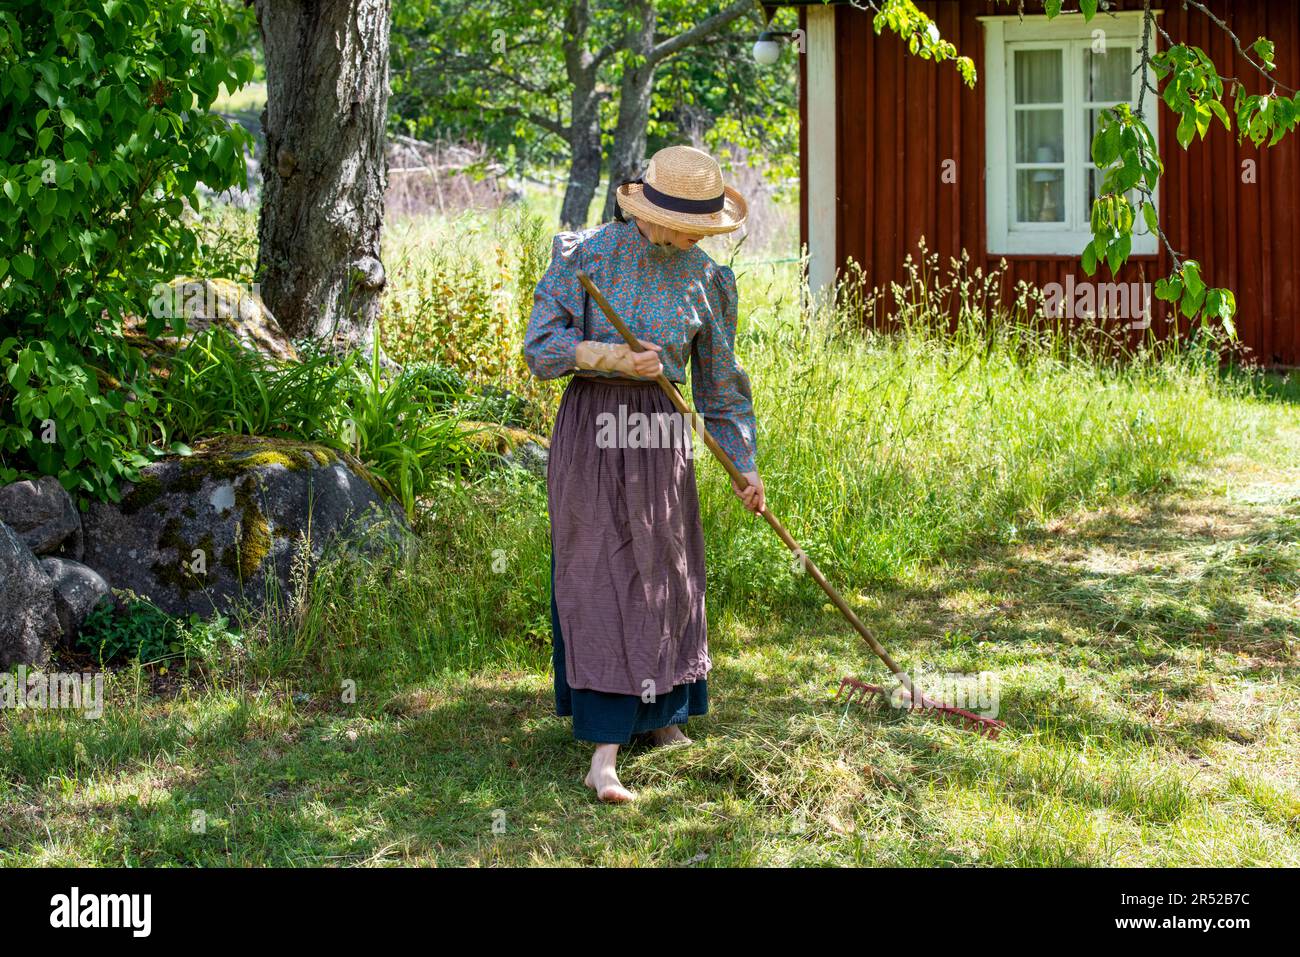 Young woman raking hay in Stensjö village Stock Photo